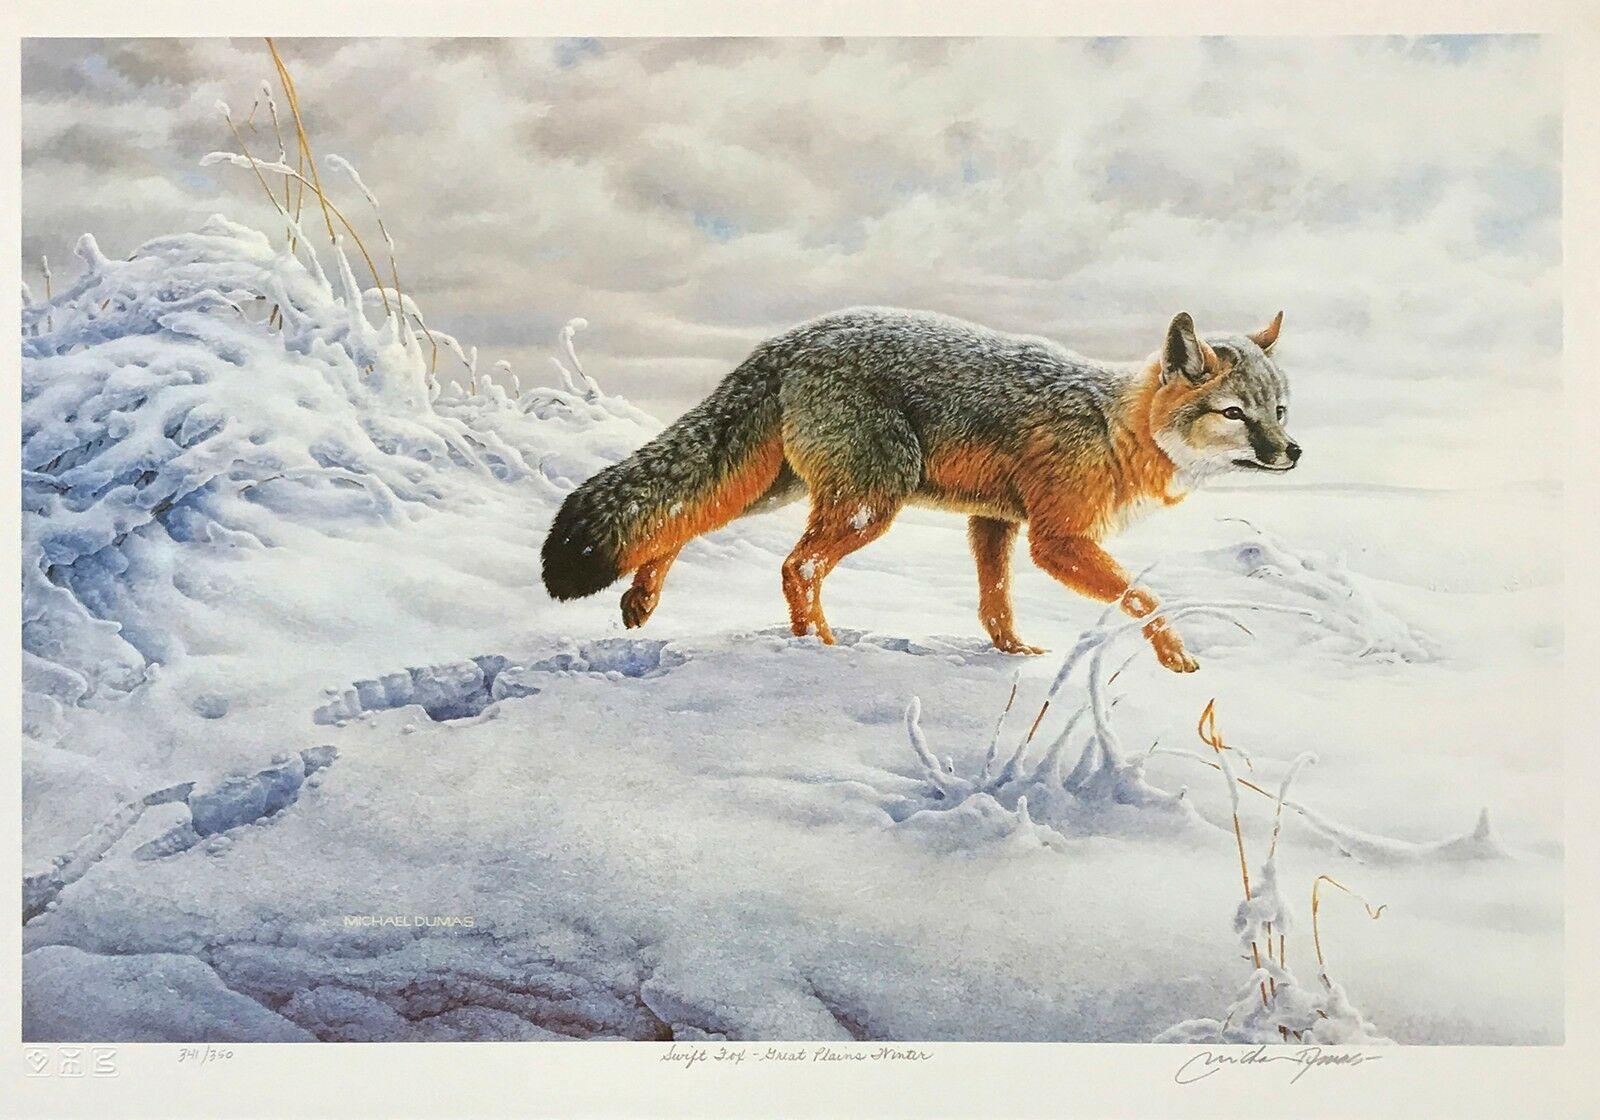 Michael Dumas Animal Print - SWIFT FOX - GREAT PLAINS WINTER